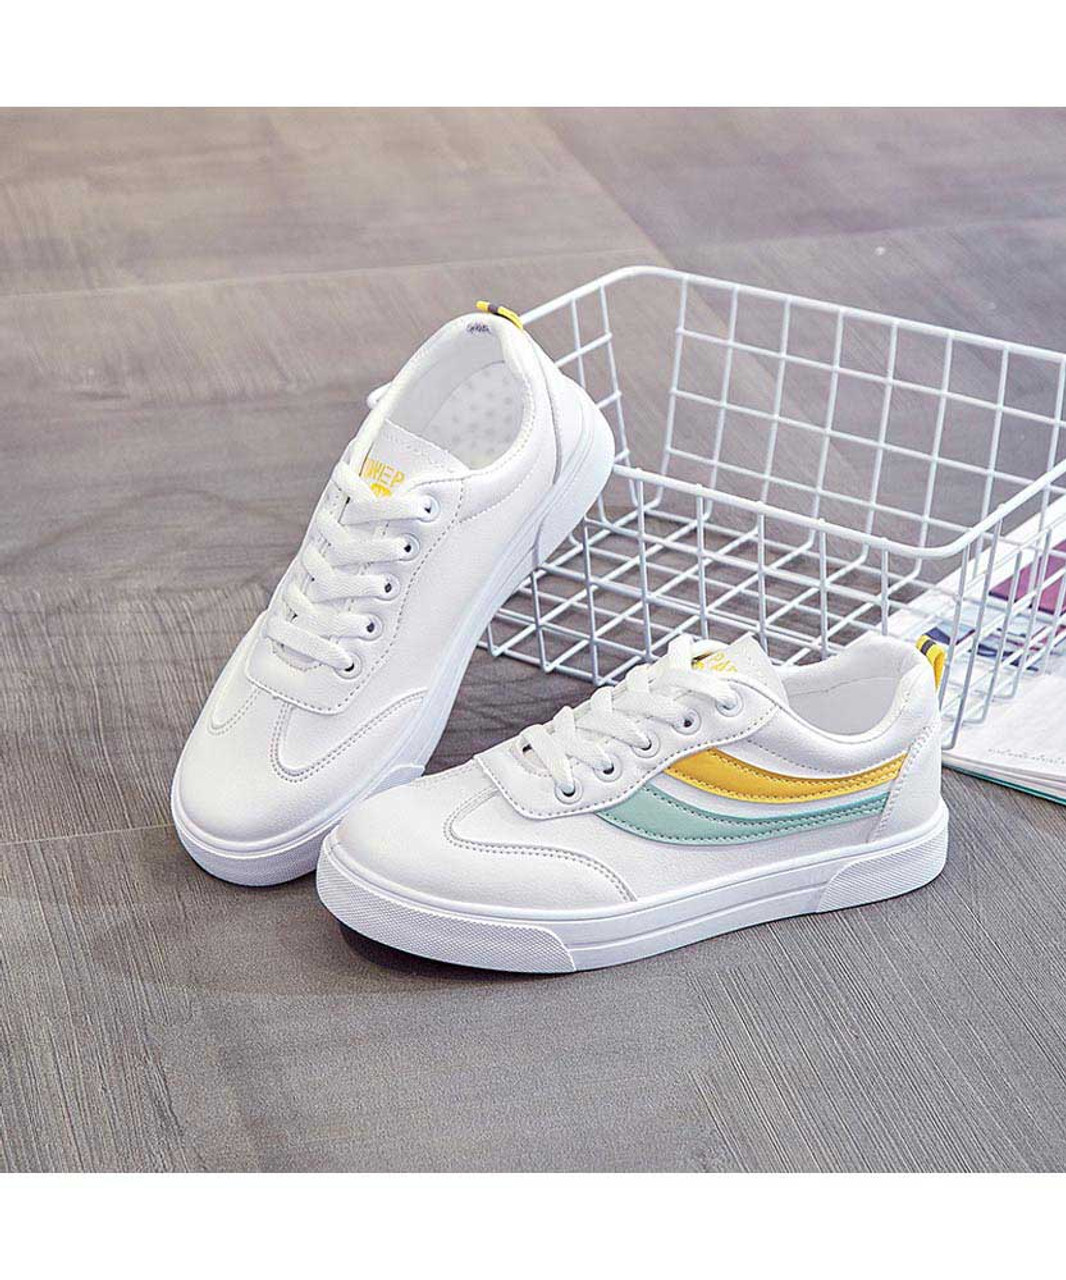 White mixed yellow green color stripe shoe sneaker | Womens sneakers ...